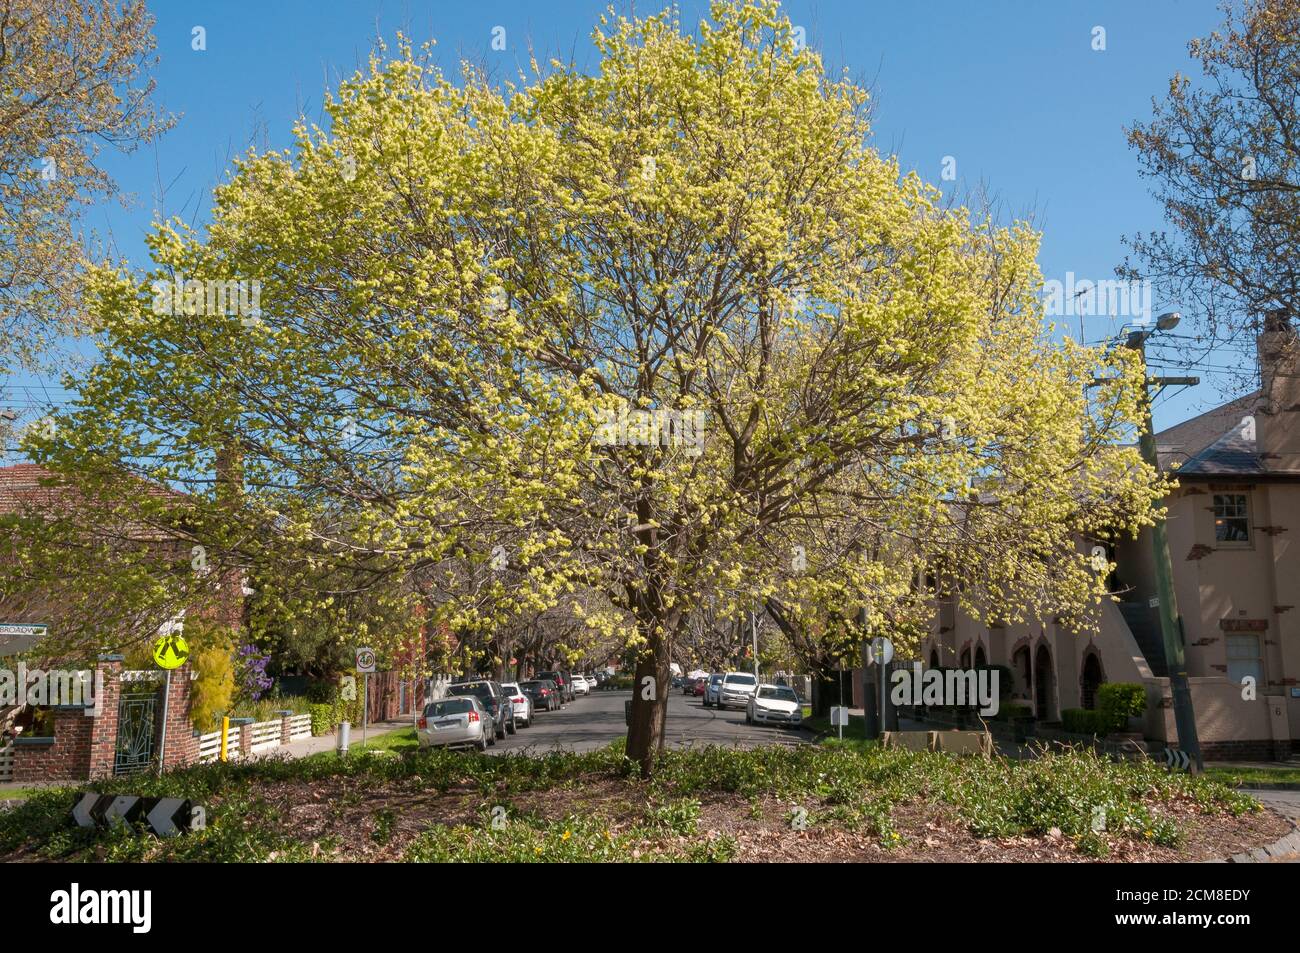 Spring foliage drapes a European elm street tree in the bayside suburb of Elwood, Melbourne, Australia Stock Photo